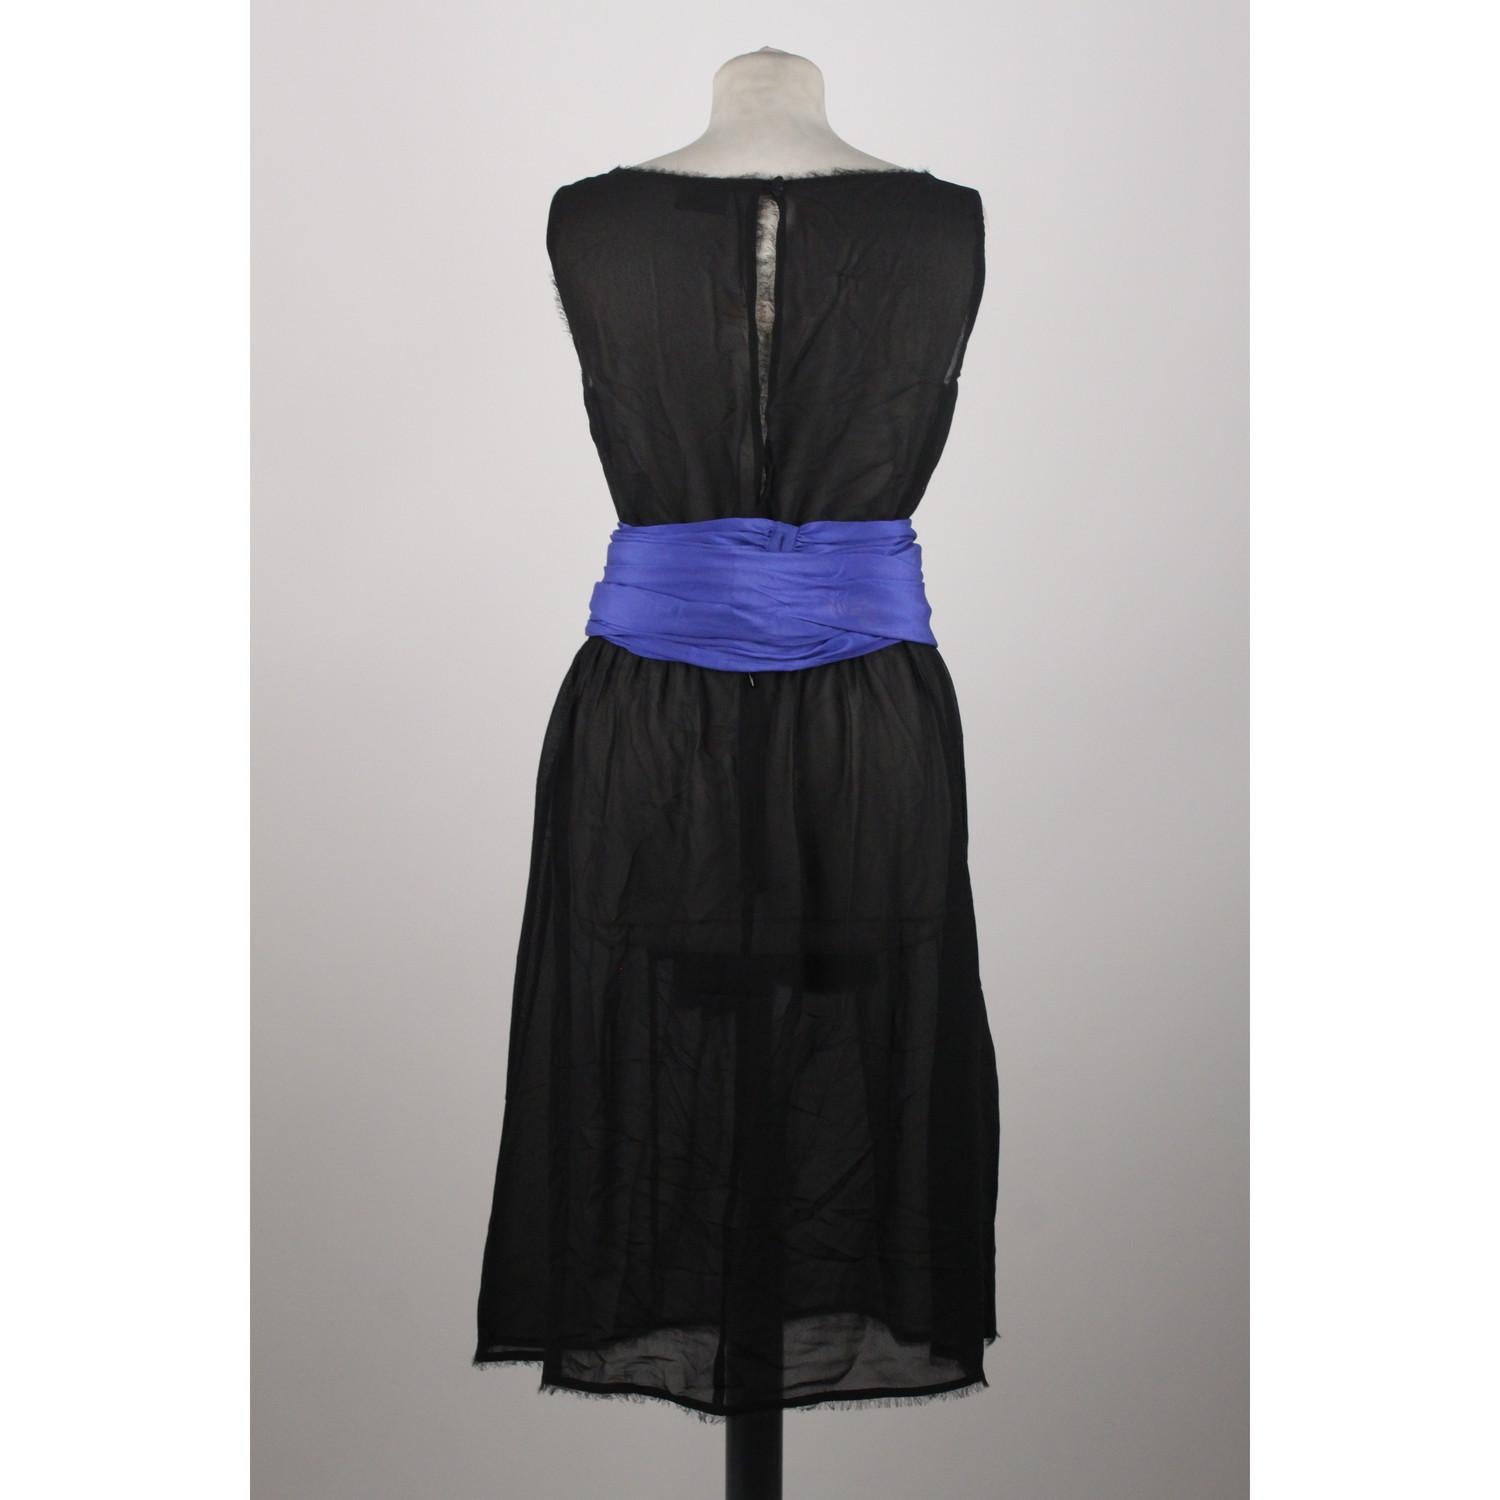 Women's Fendi Black Silk Sleeveless Dress with Blue Belt Size 44 IT